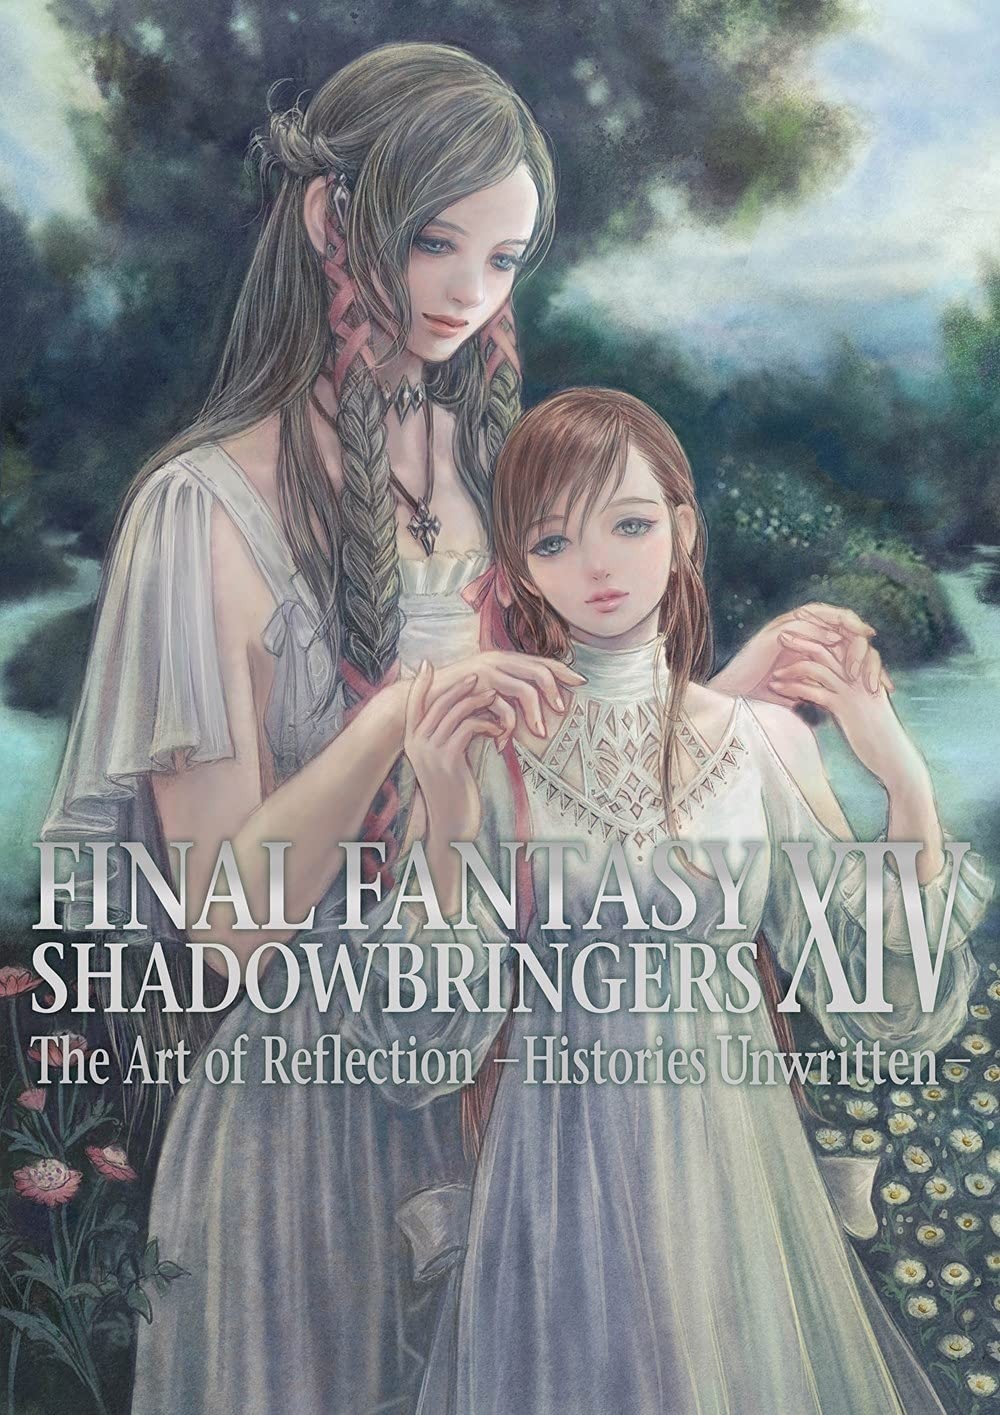 Final Fantasy XIV: SHADOWBRINGERS The Art of Reflection - Histories Unwritten - Art Book